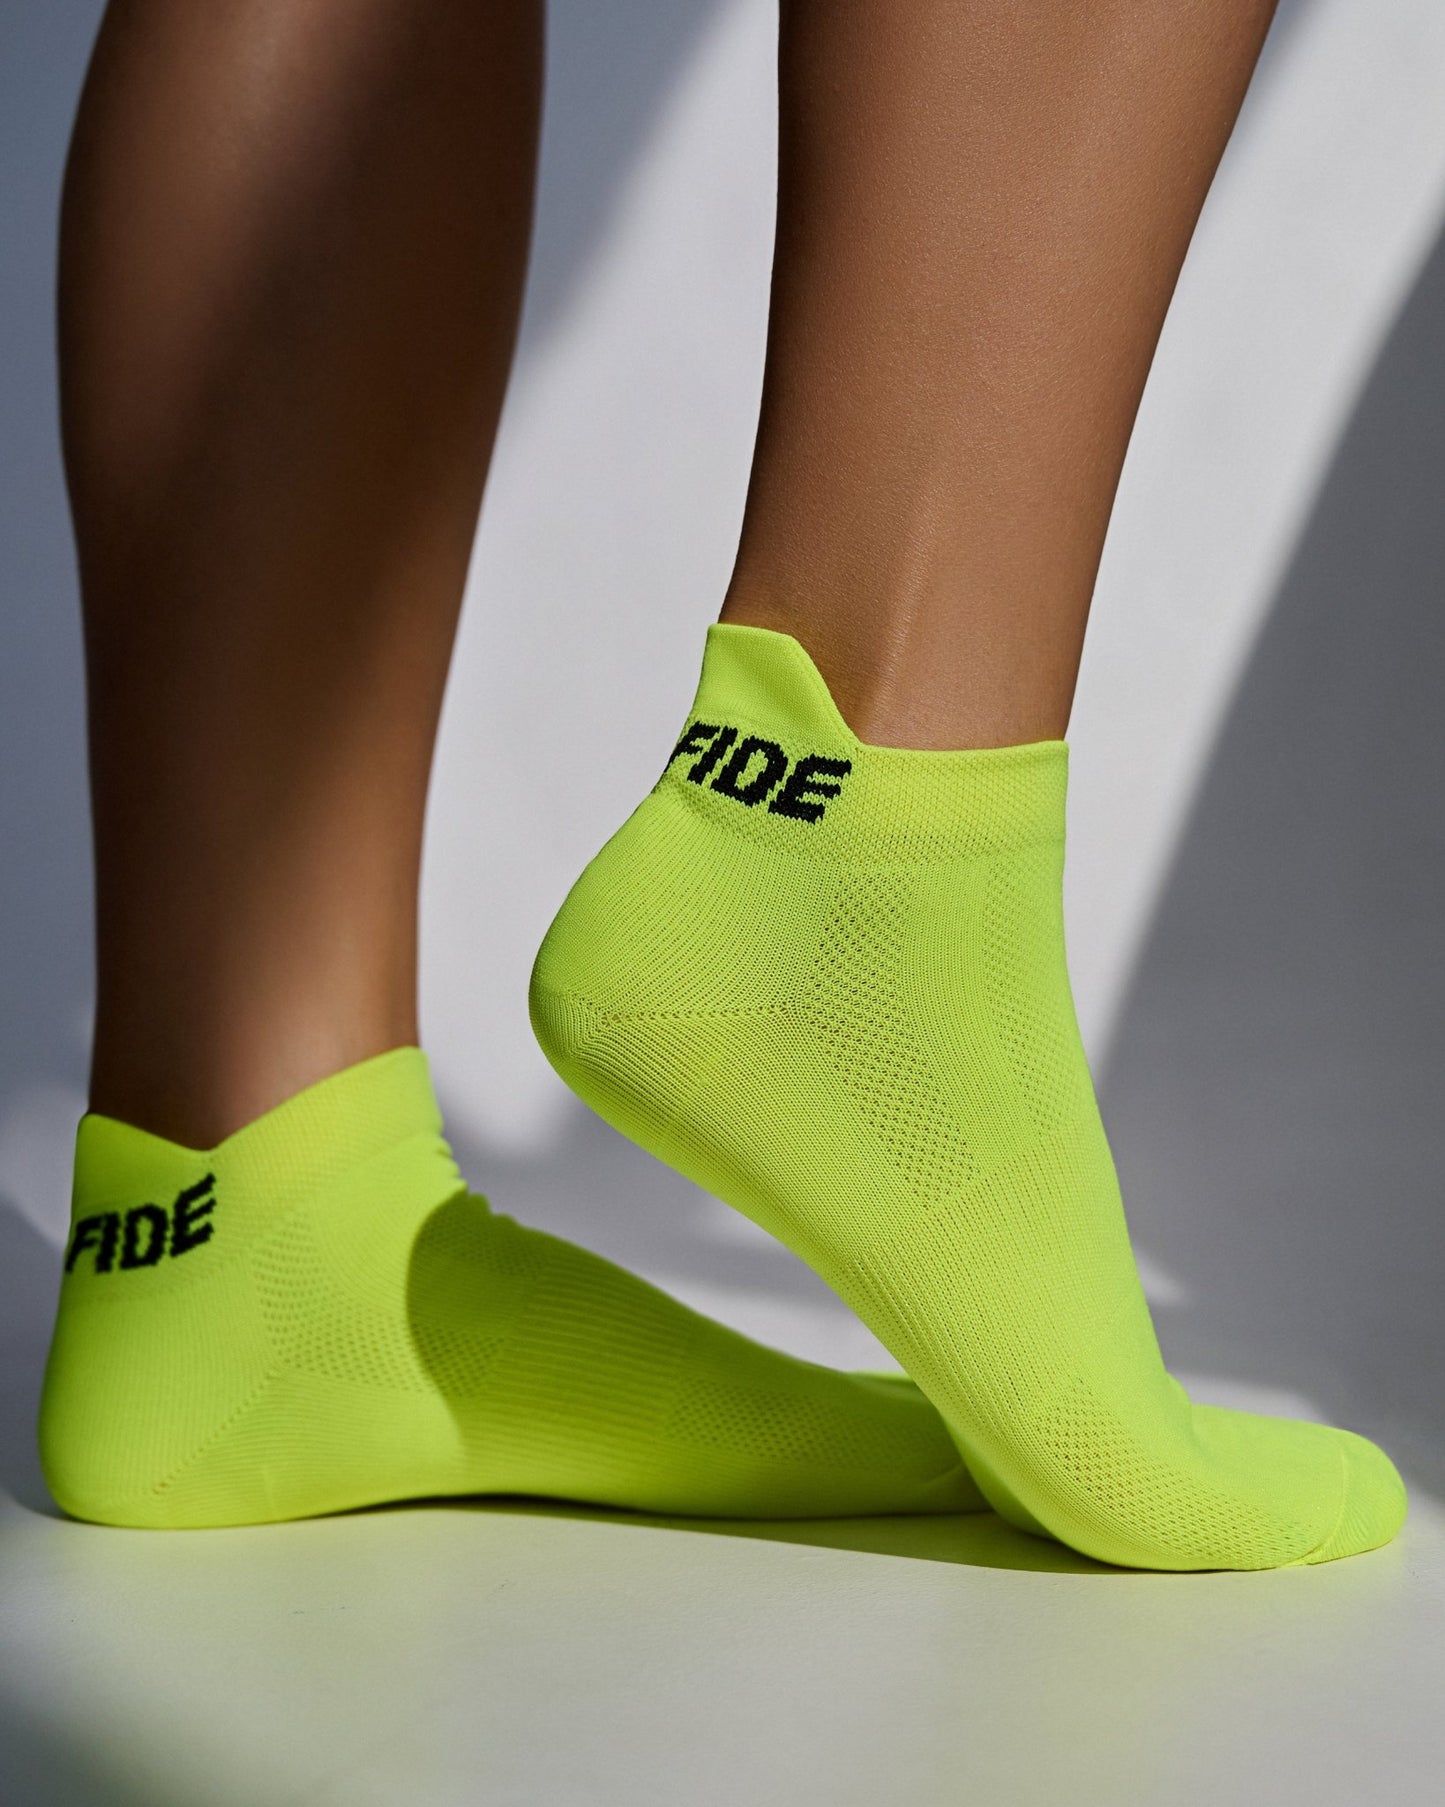 Socks Acid Yellow (3 pairs) - Bona Fide